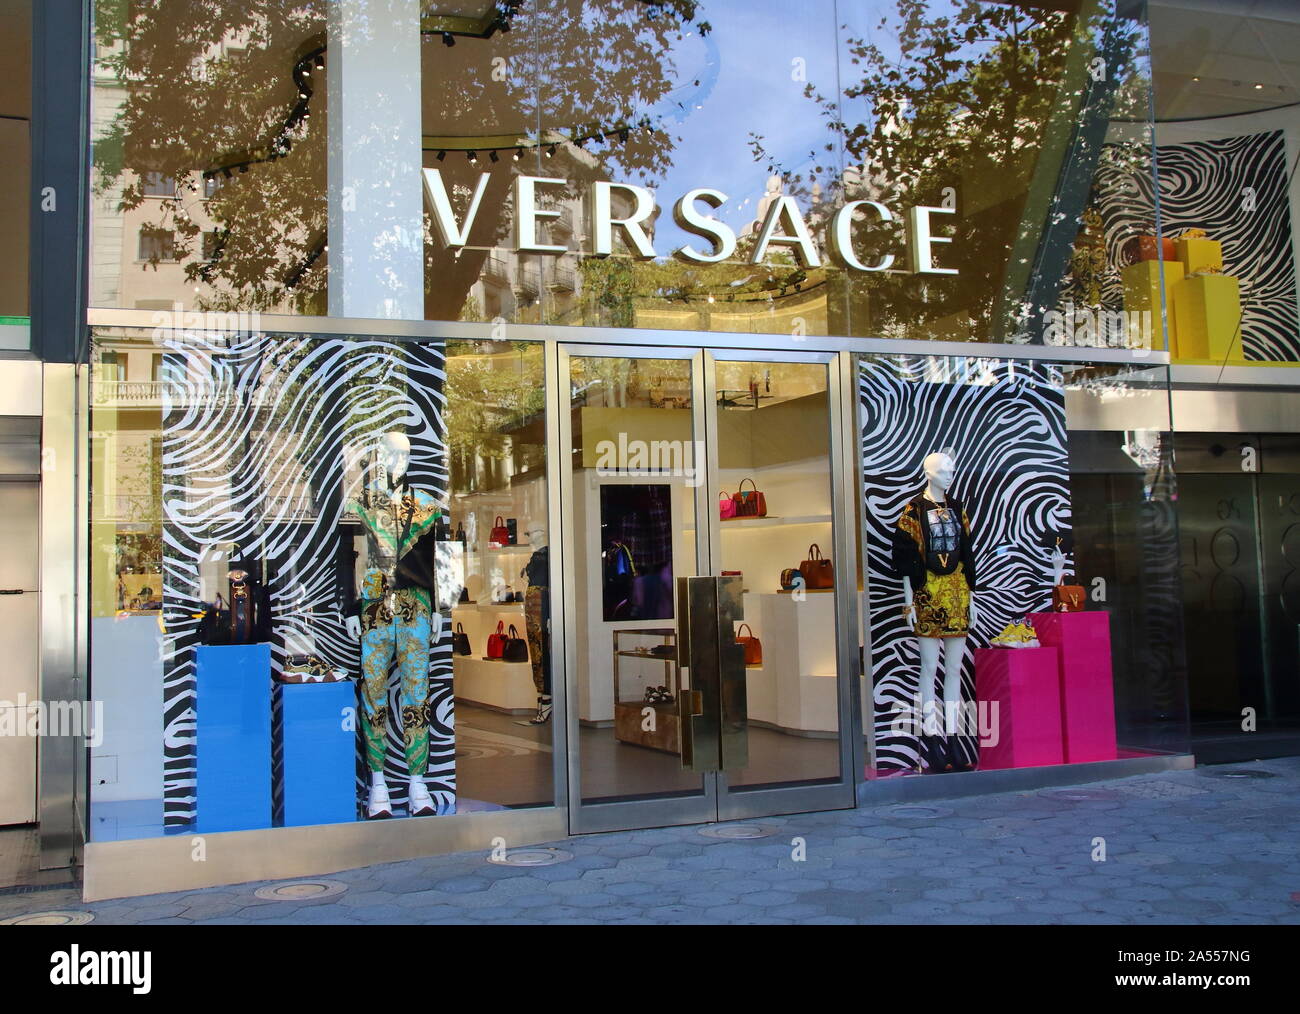 Versace store seen in Paseo de Gracia, Barcelona Stock Photo - Alamy